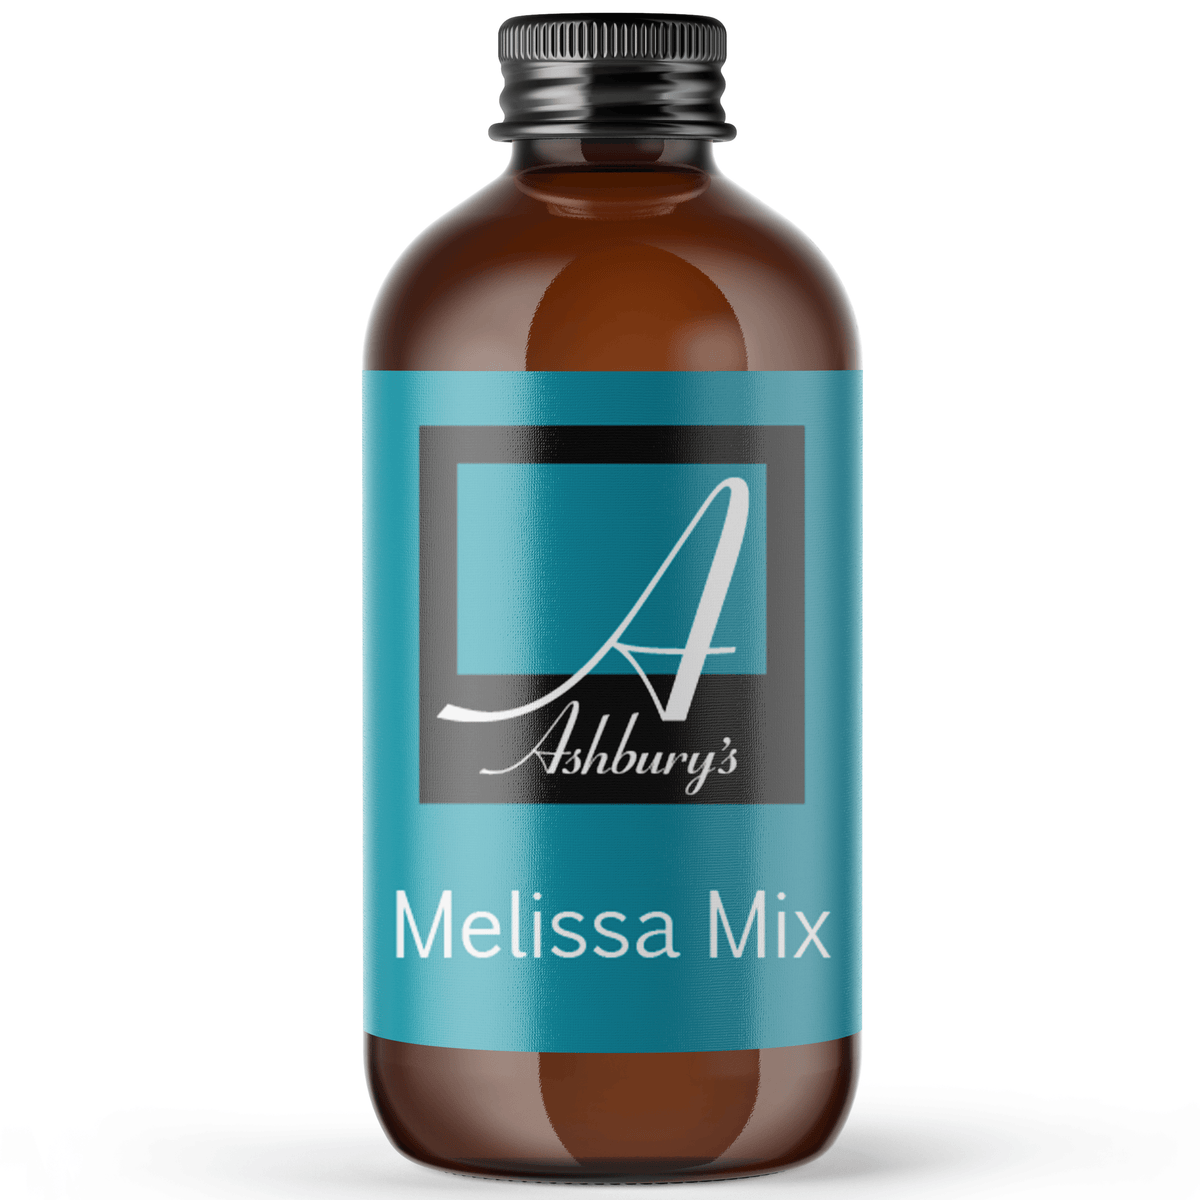 Melissa Mix: Melissa &amp; Citronella